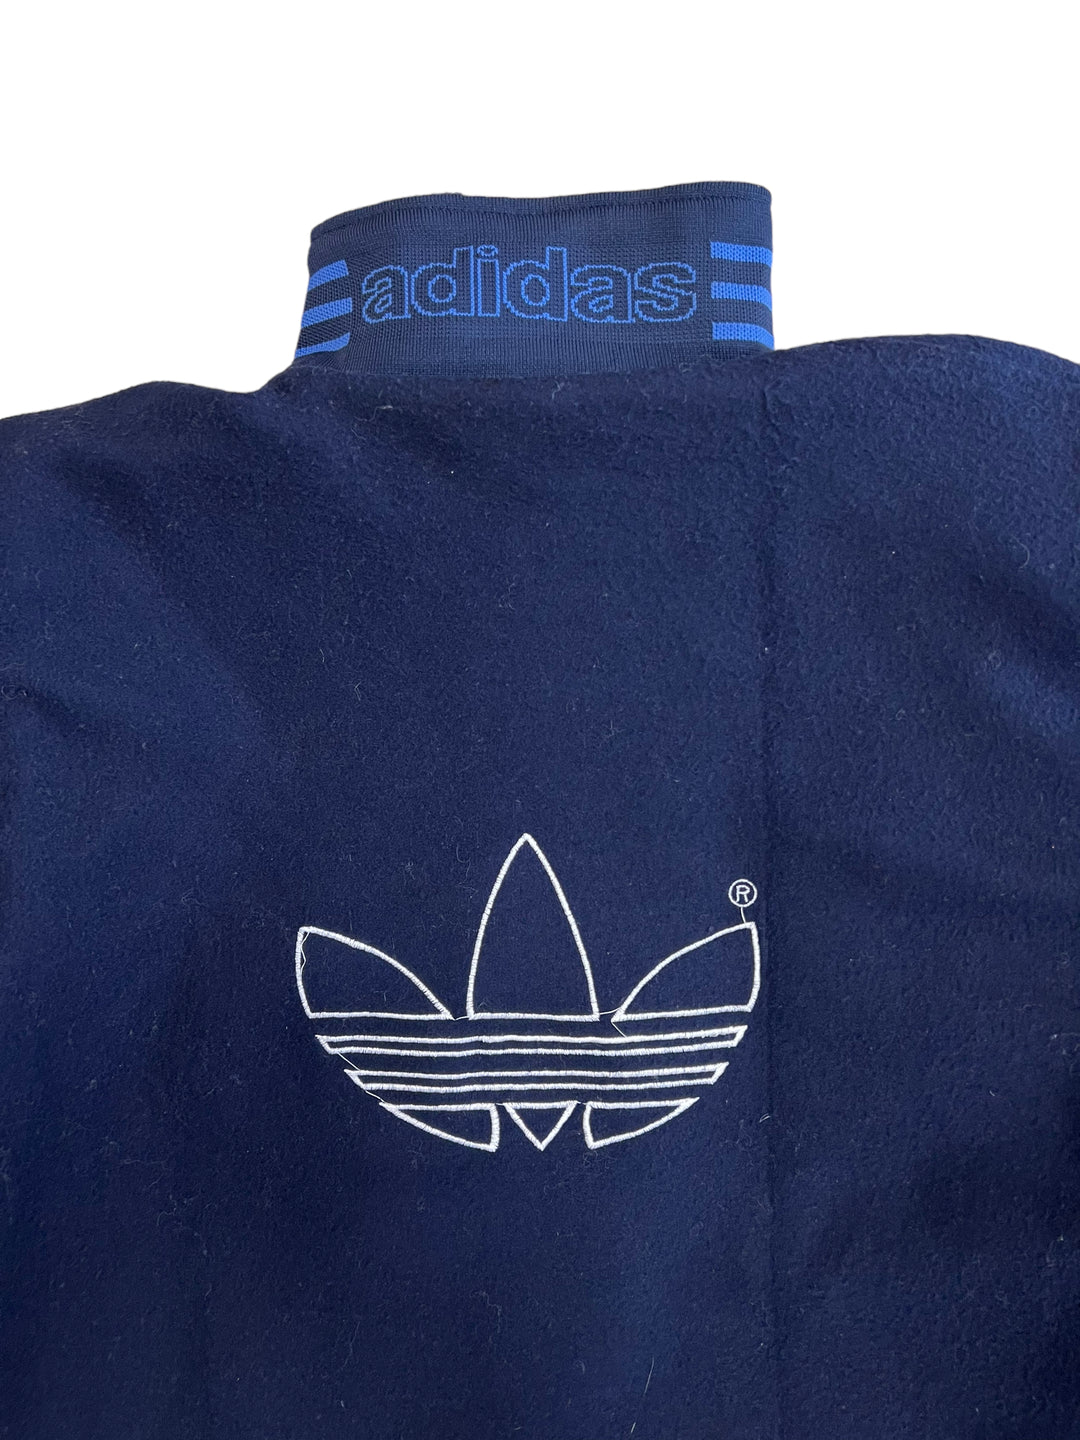 Adidas Vintage Reversible Fleece & Polyester Jacket w/ Embroidered Big Logo Men’s Medium